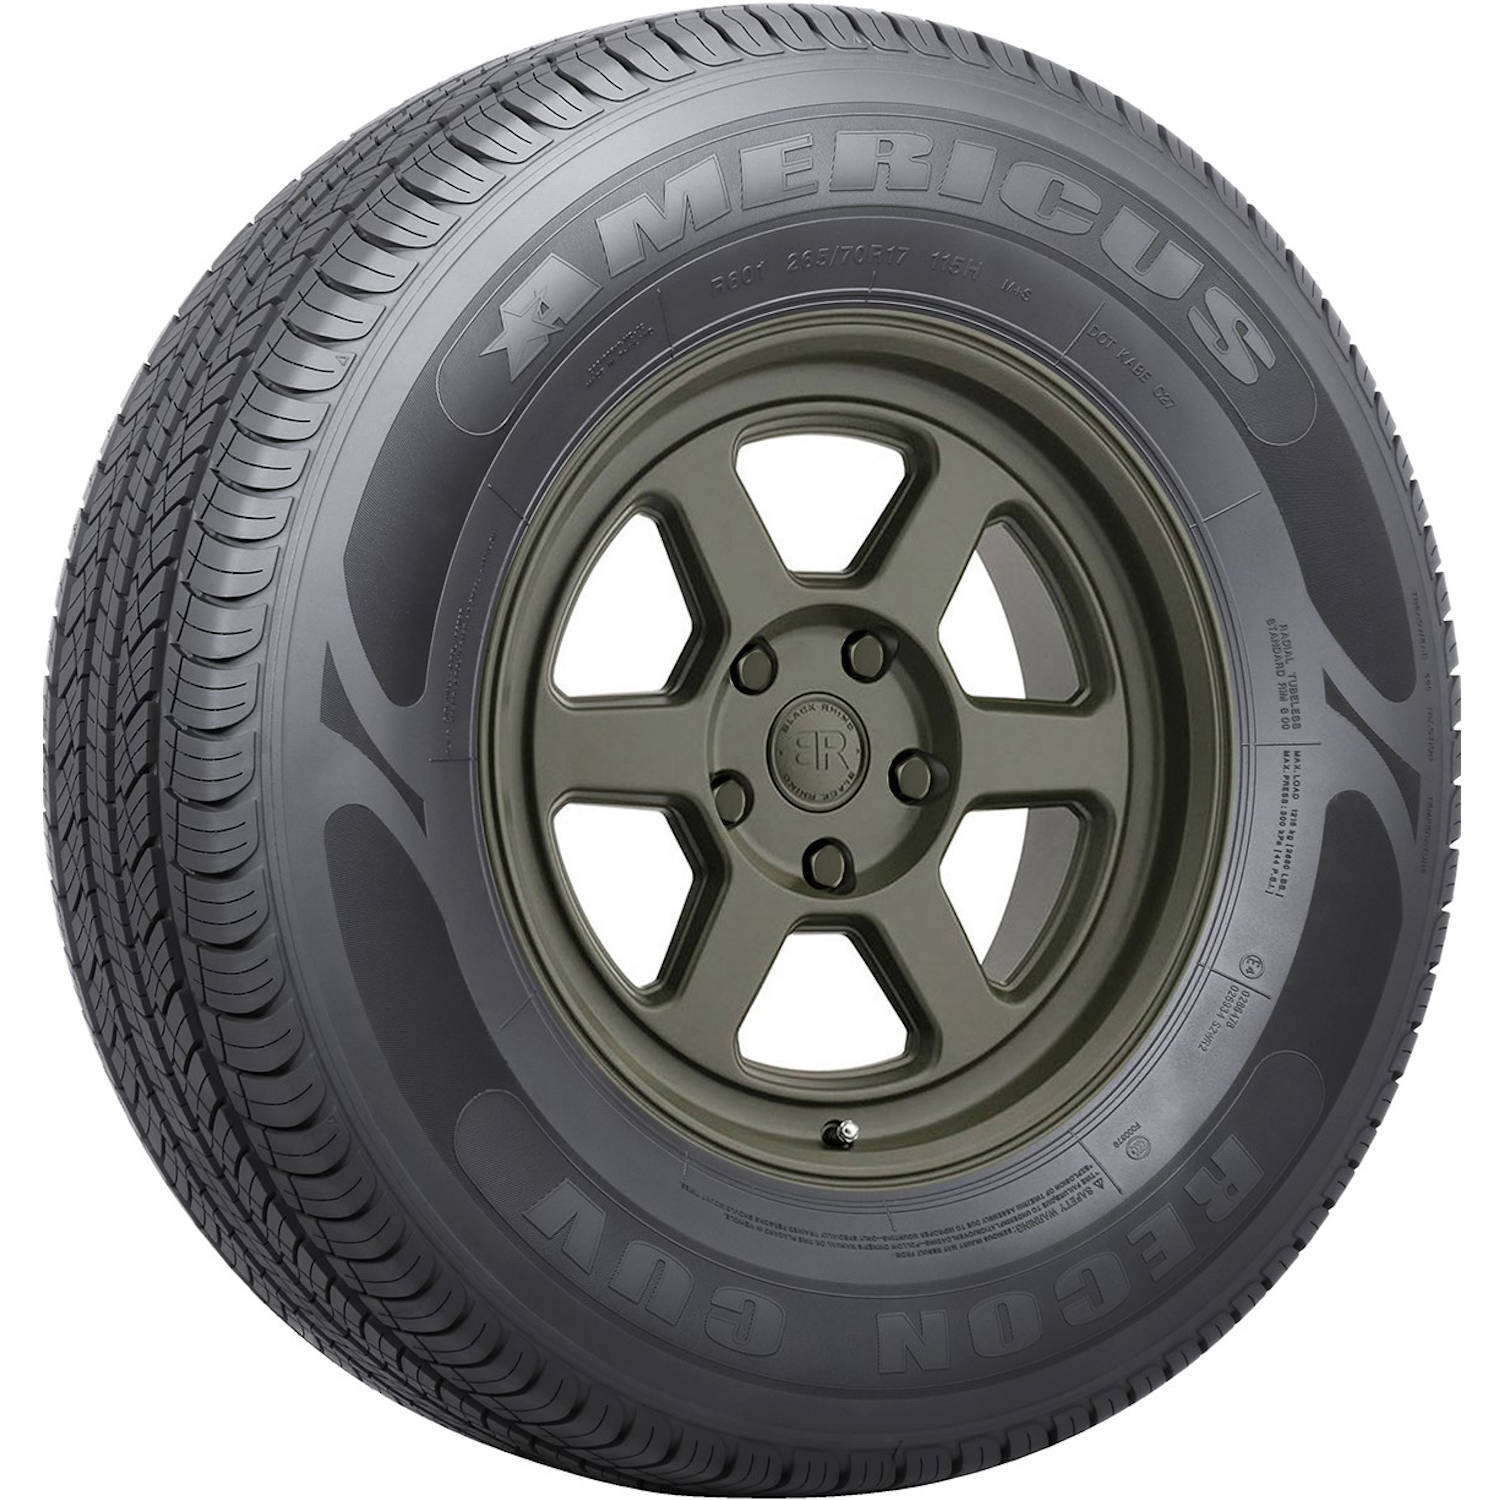 AMERICUS RECON CUV 245/70R16 XL (29.5X9.7R 16) Tires